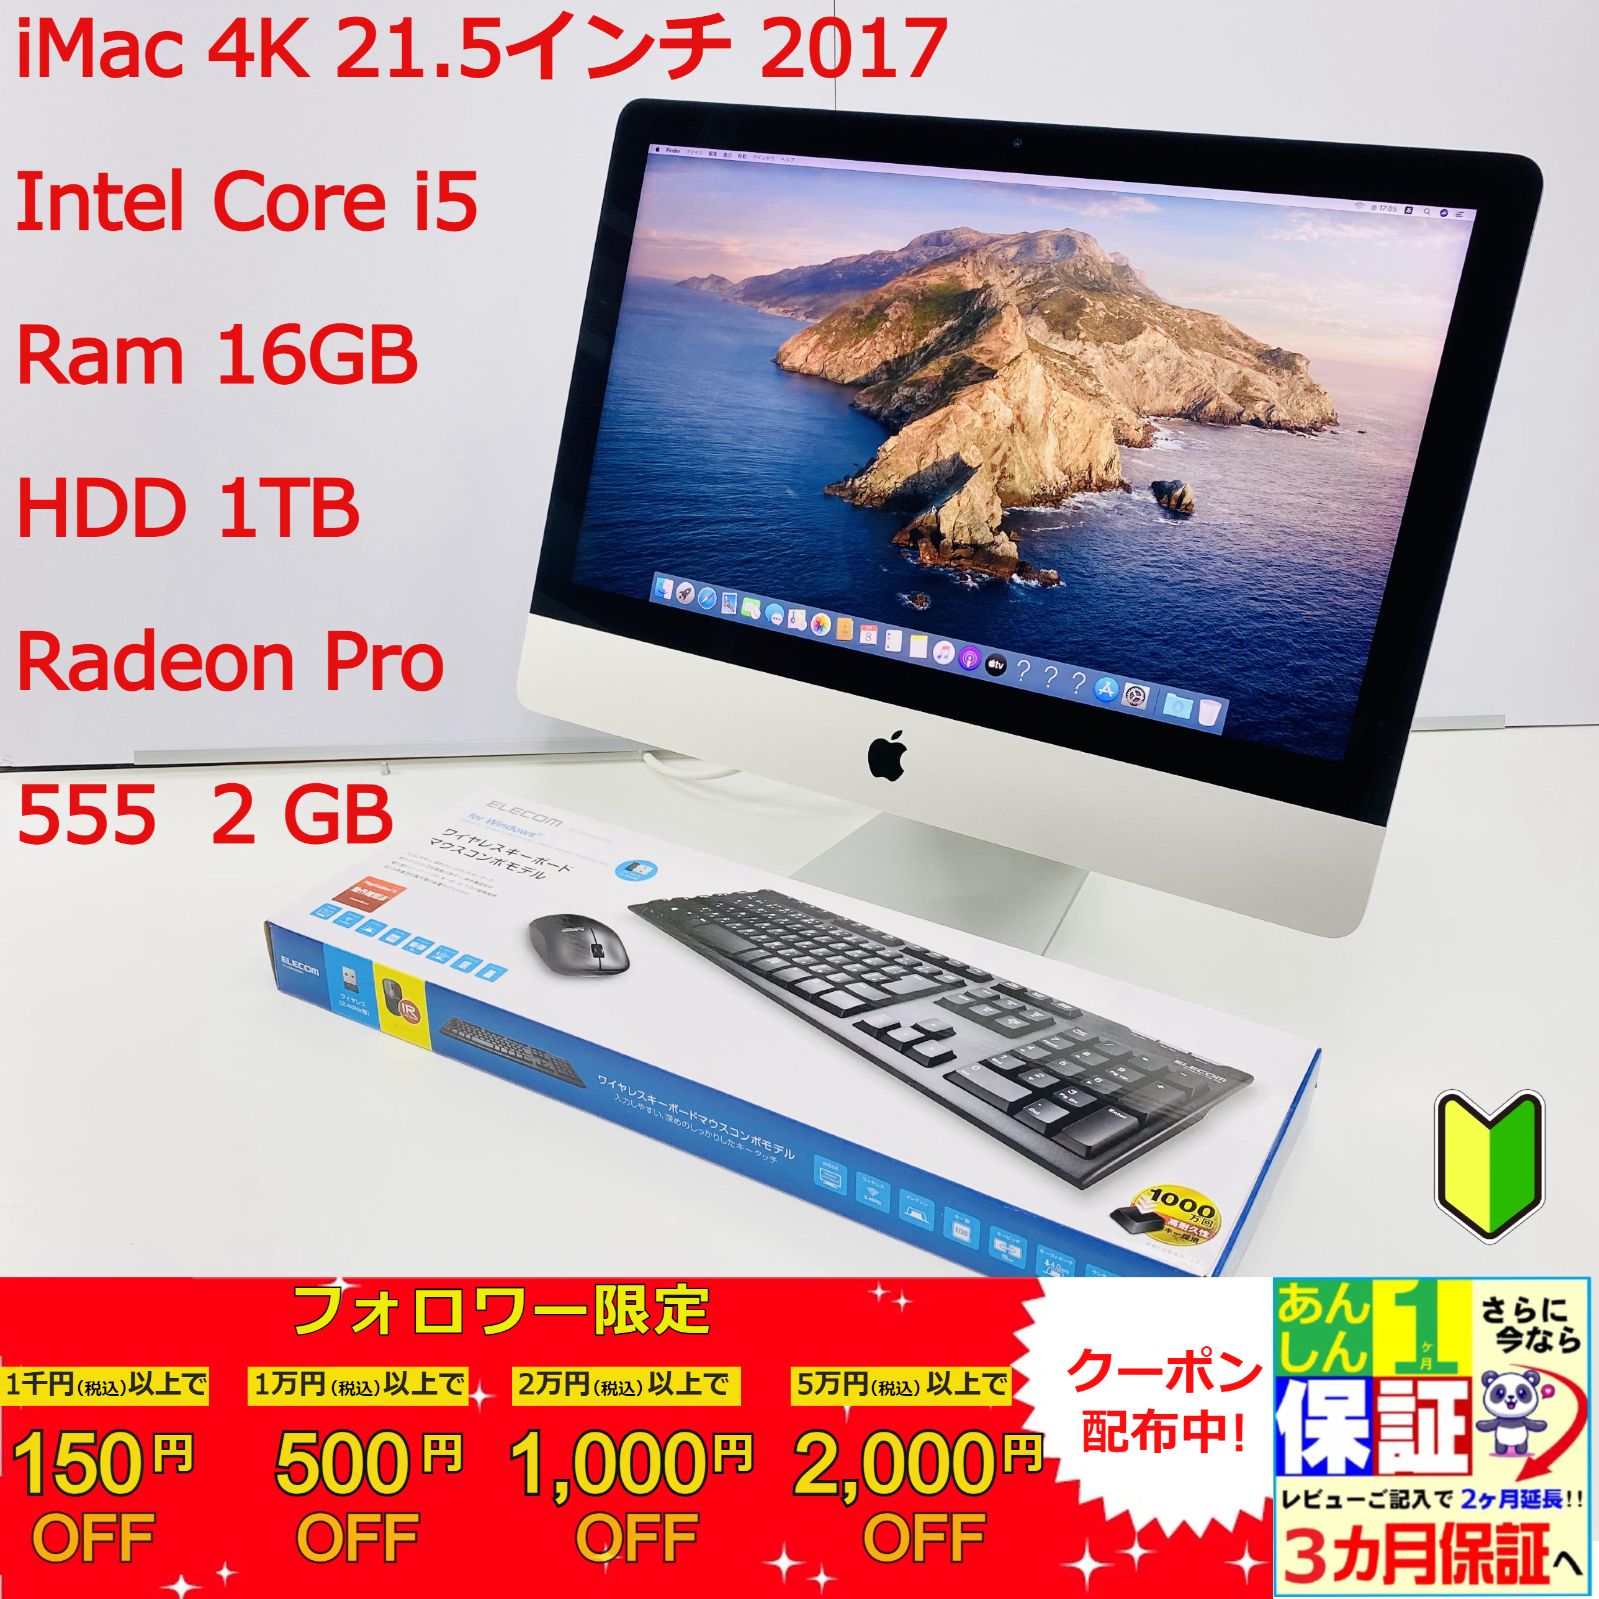 iMac 4K 21.5インチ 2017 Intel Core i5/Ram 16GB/HDD 1TB/ Radeon Pro ...